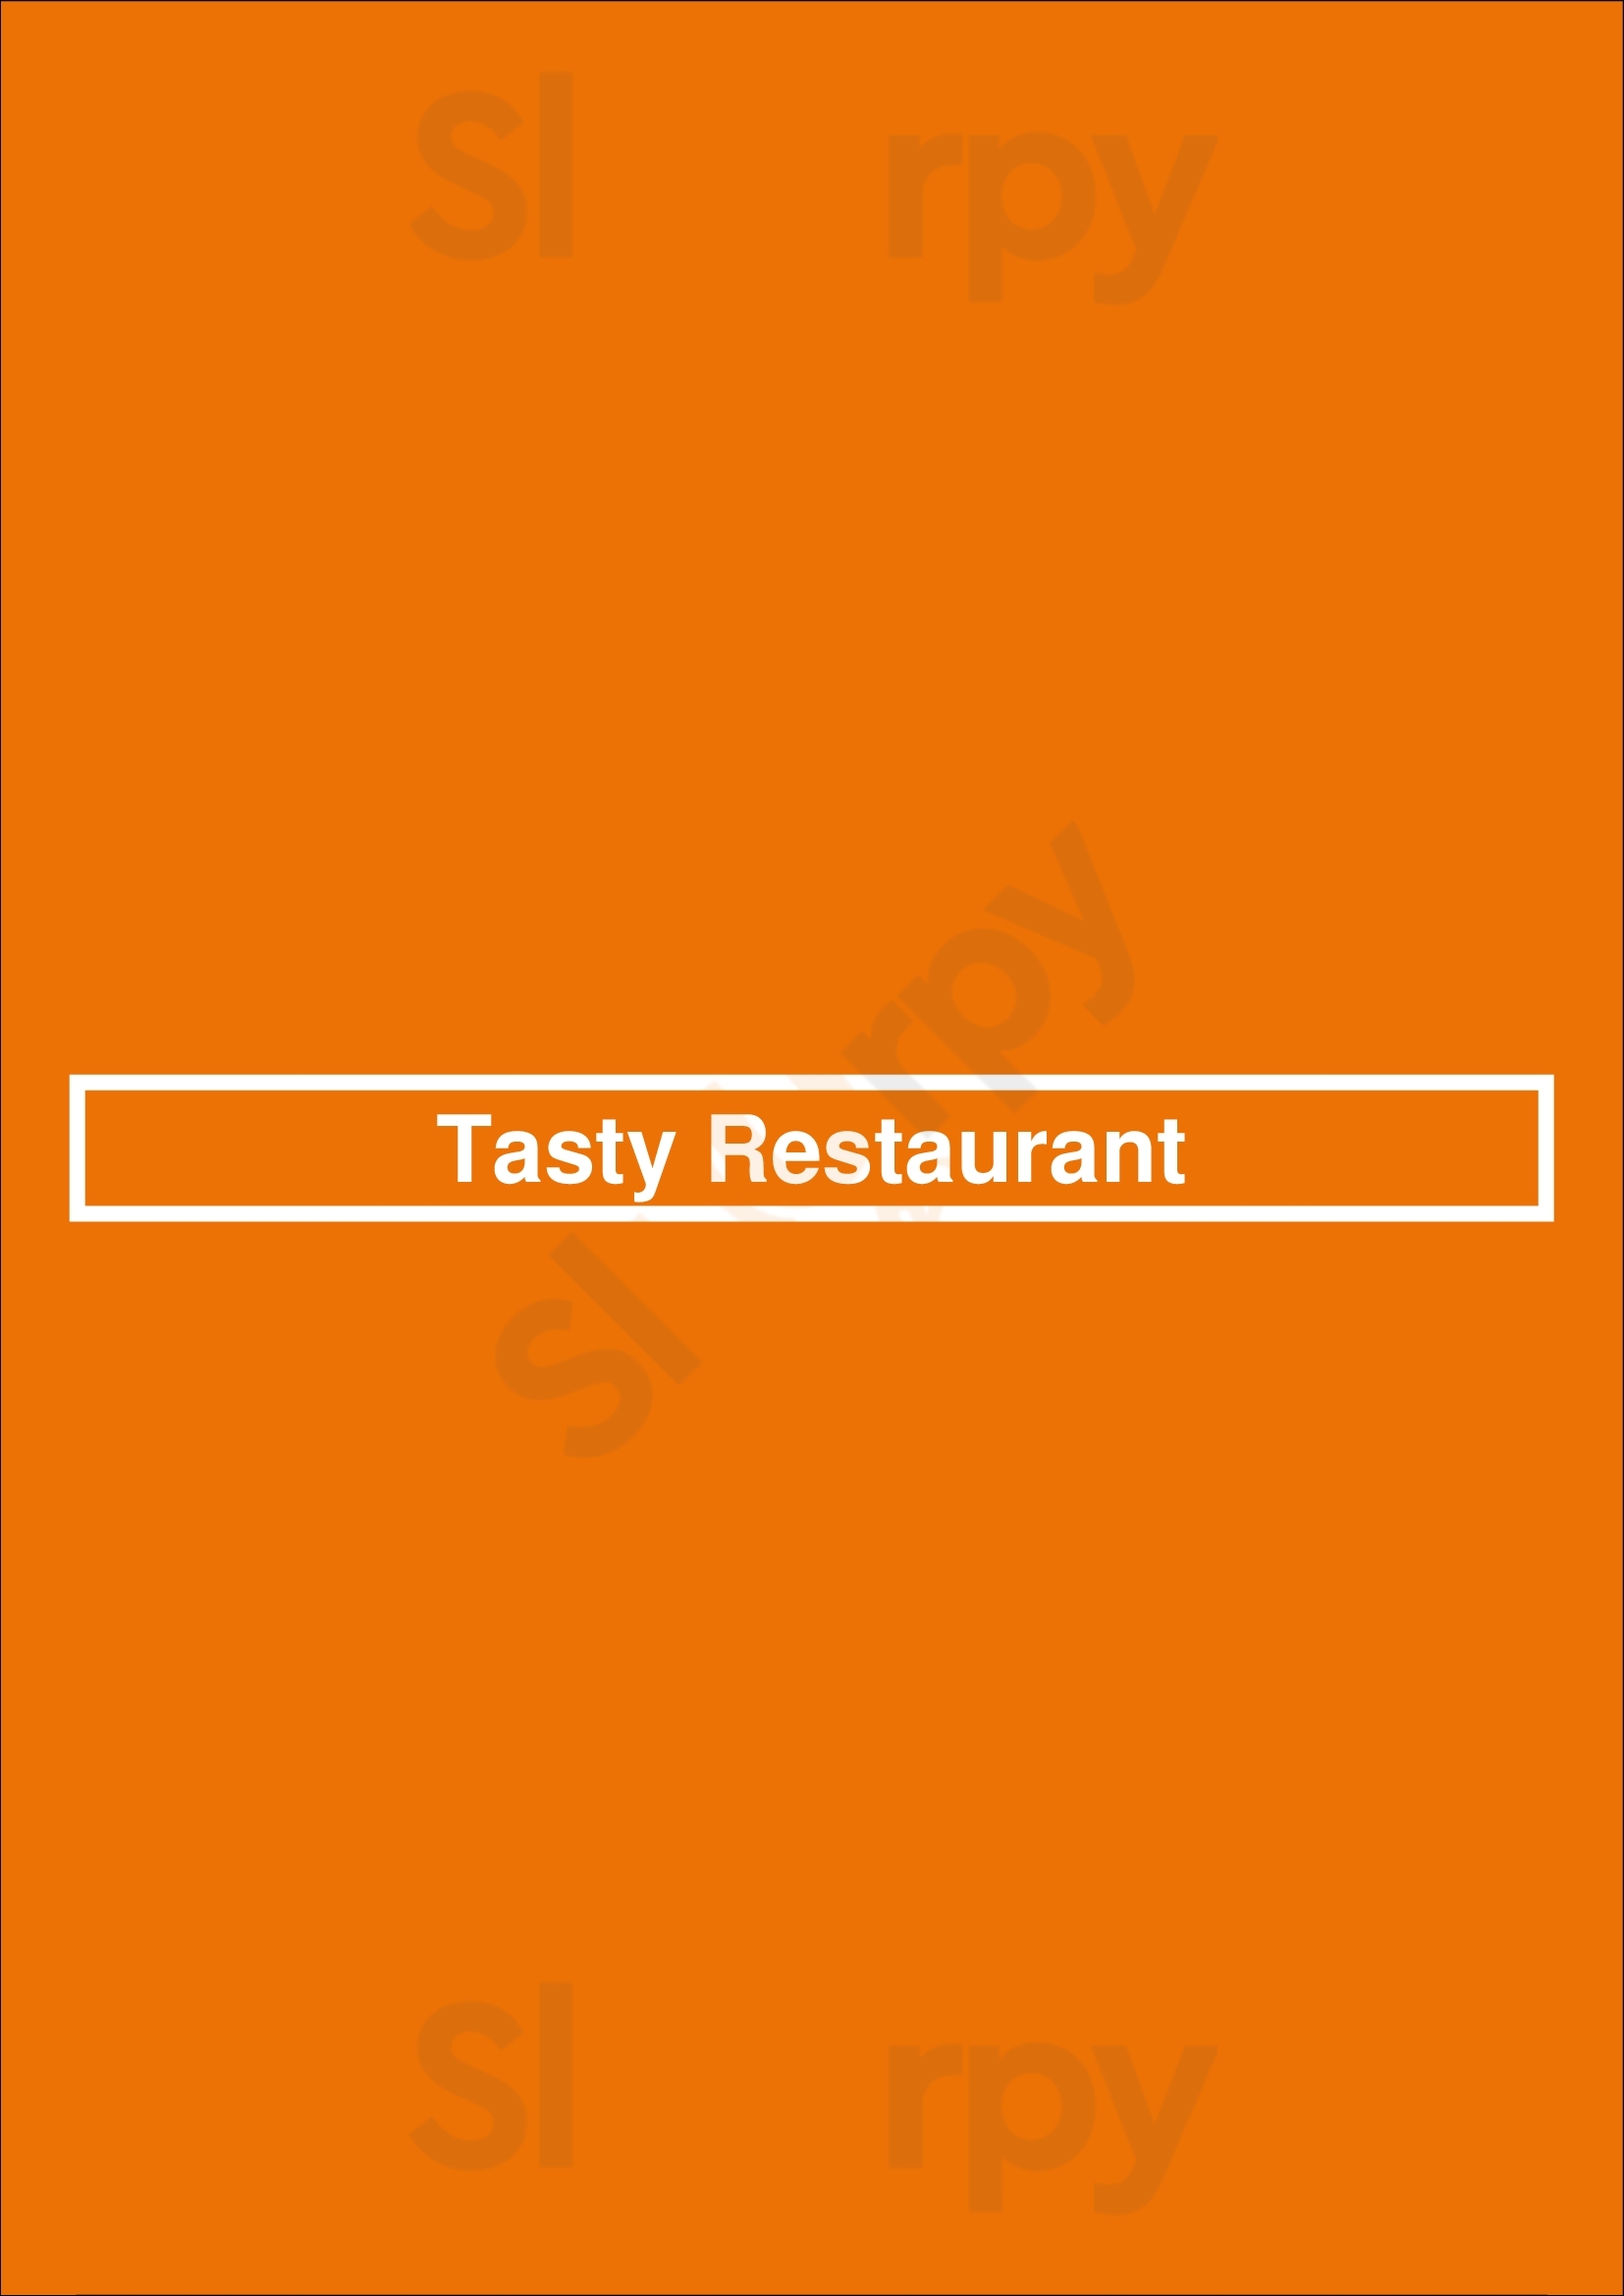 Tasty Restaurant Newark Menu - 1